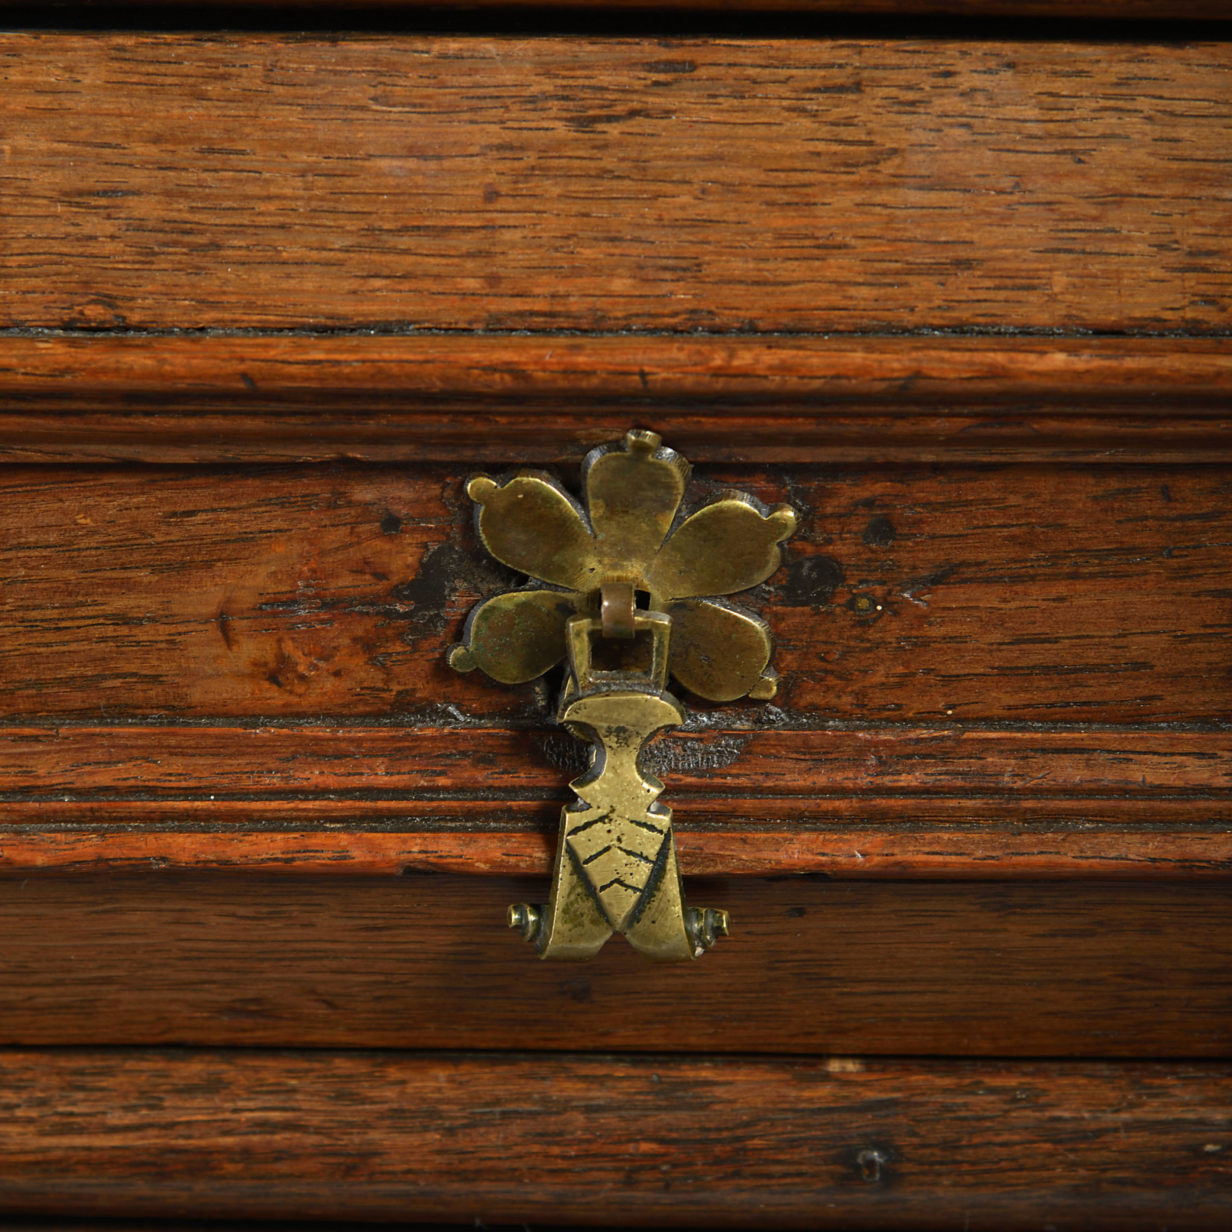 Late 17th century charles ii oak geometric chest of drawers